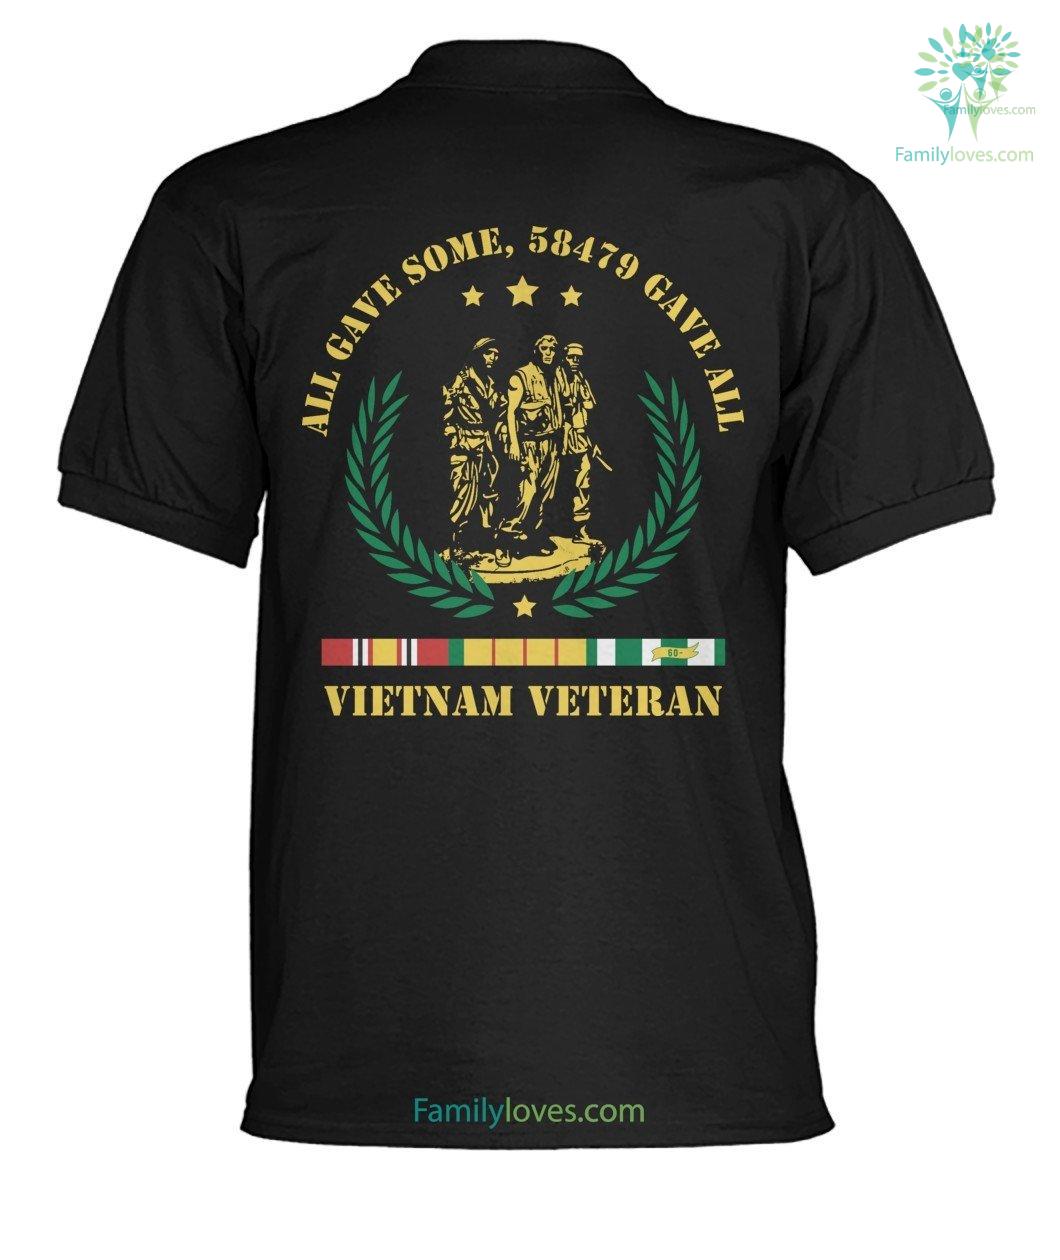 ALL GAVE SOME, 58479 GAVE ALL, Vietnam Veterans Of America, Gildan ...